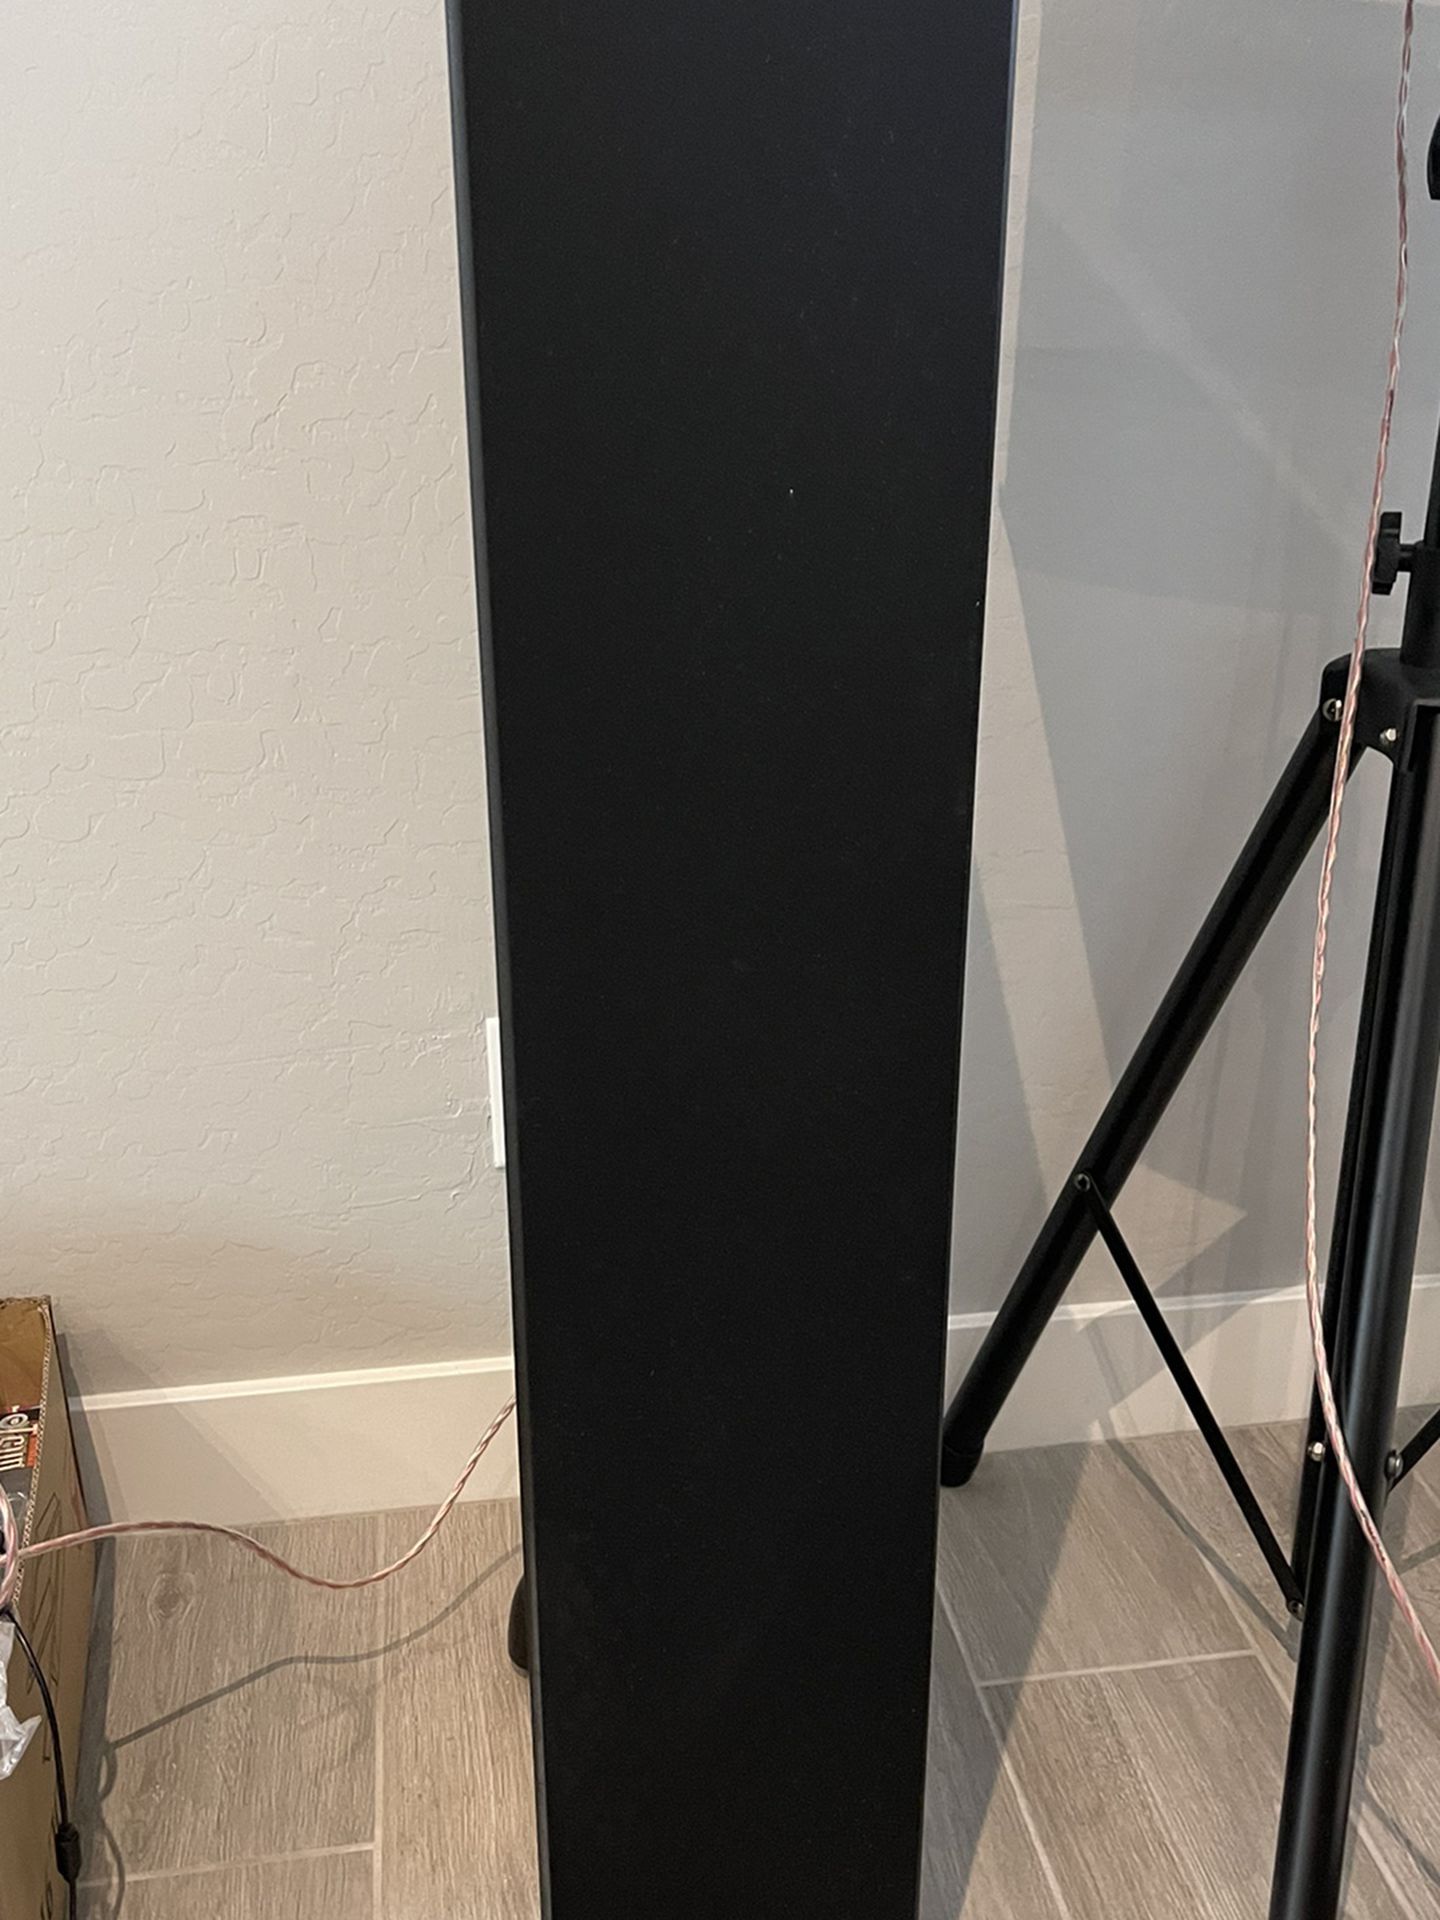 Polk Speaker And Yamaha Receiver